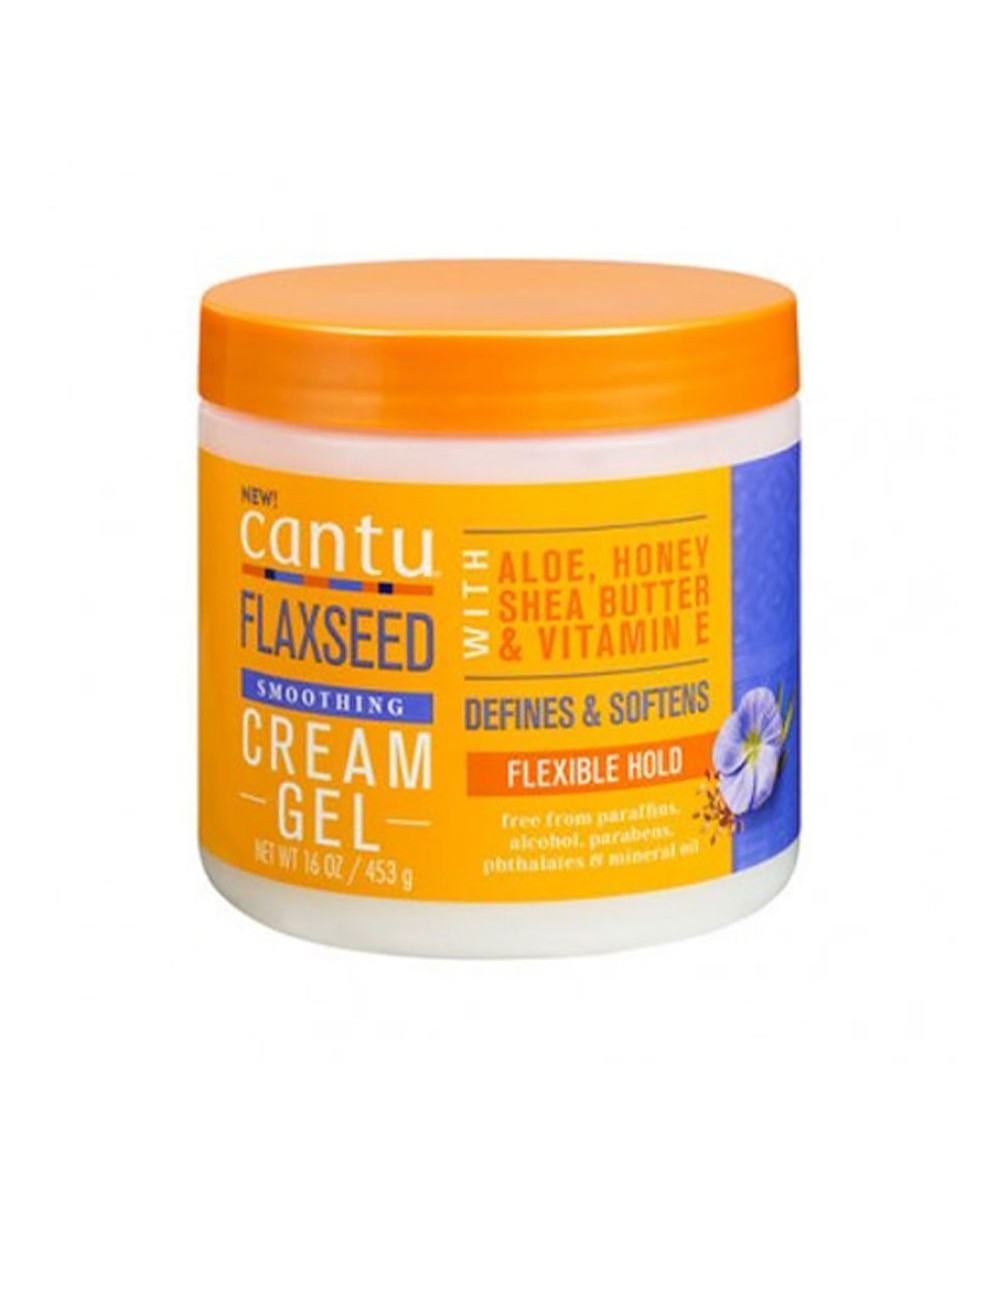 FLAXSEED SMOOTHING cream gel 453 gr